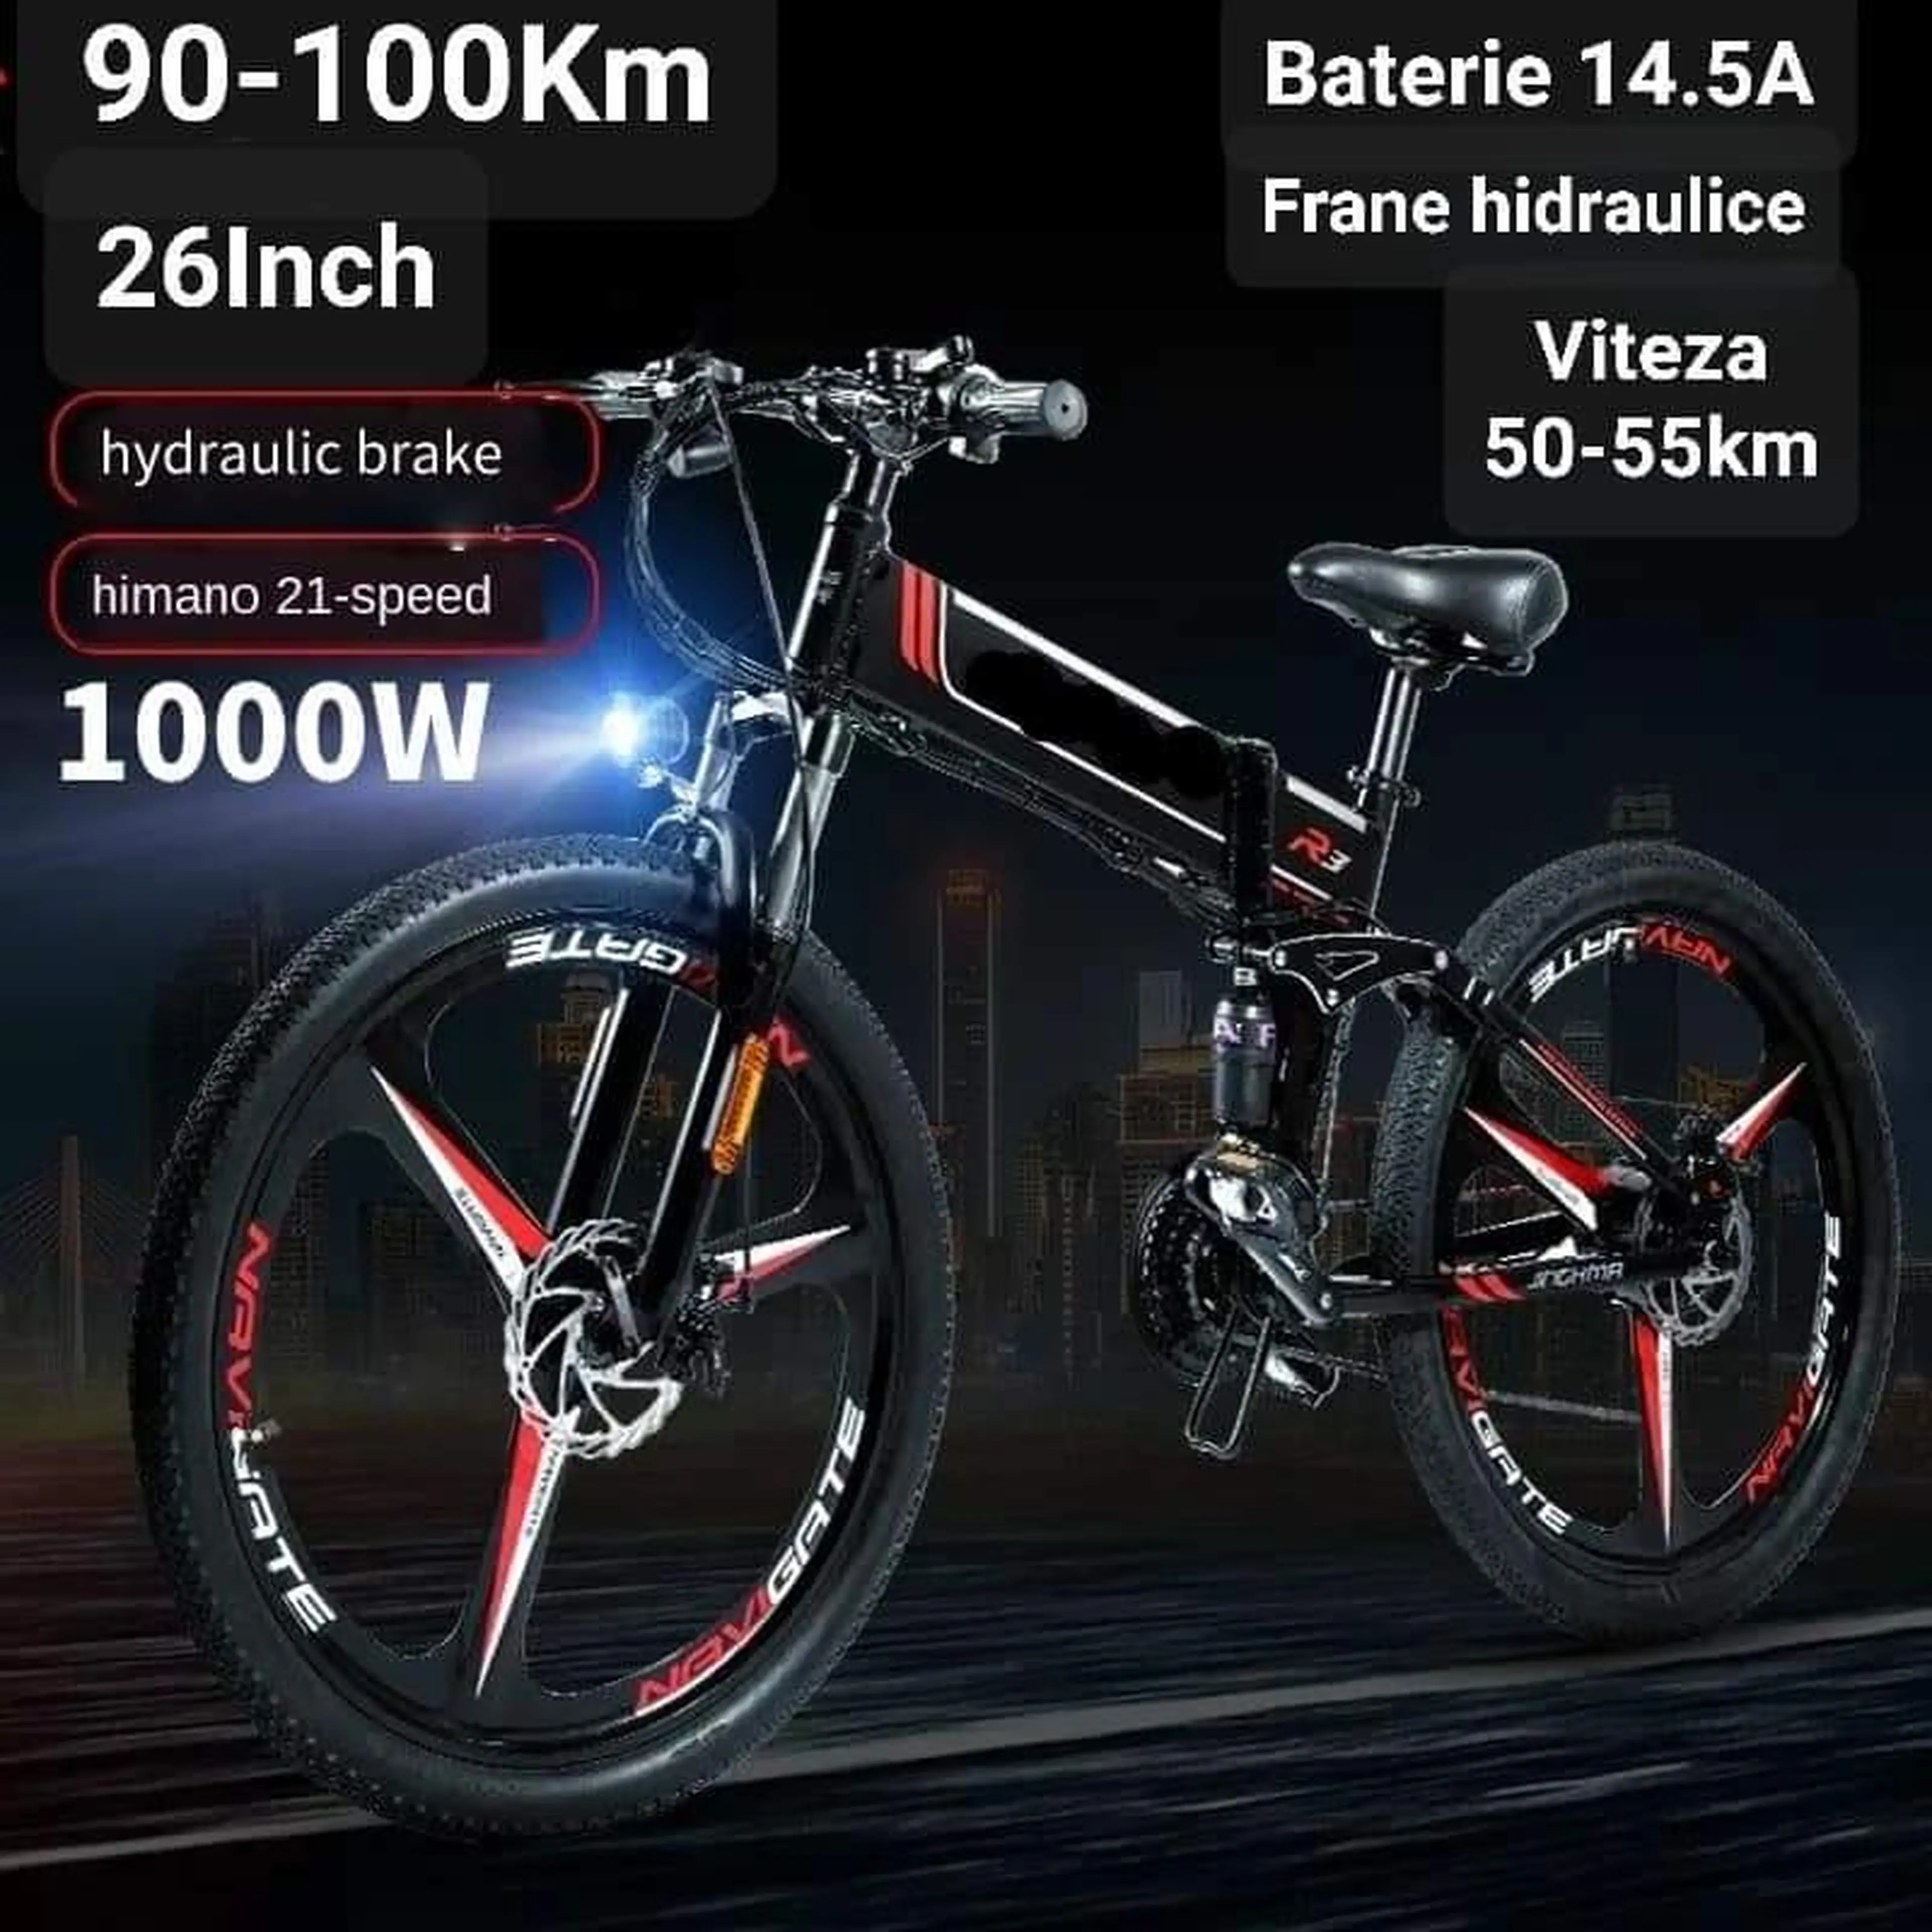 Image Bicicletă electrică 1000w Viteza 55km,26inch,Baterie 14.5A, Pliabila,Frane hidra